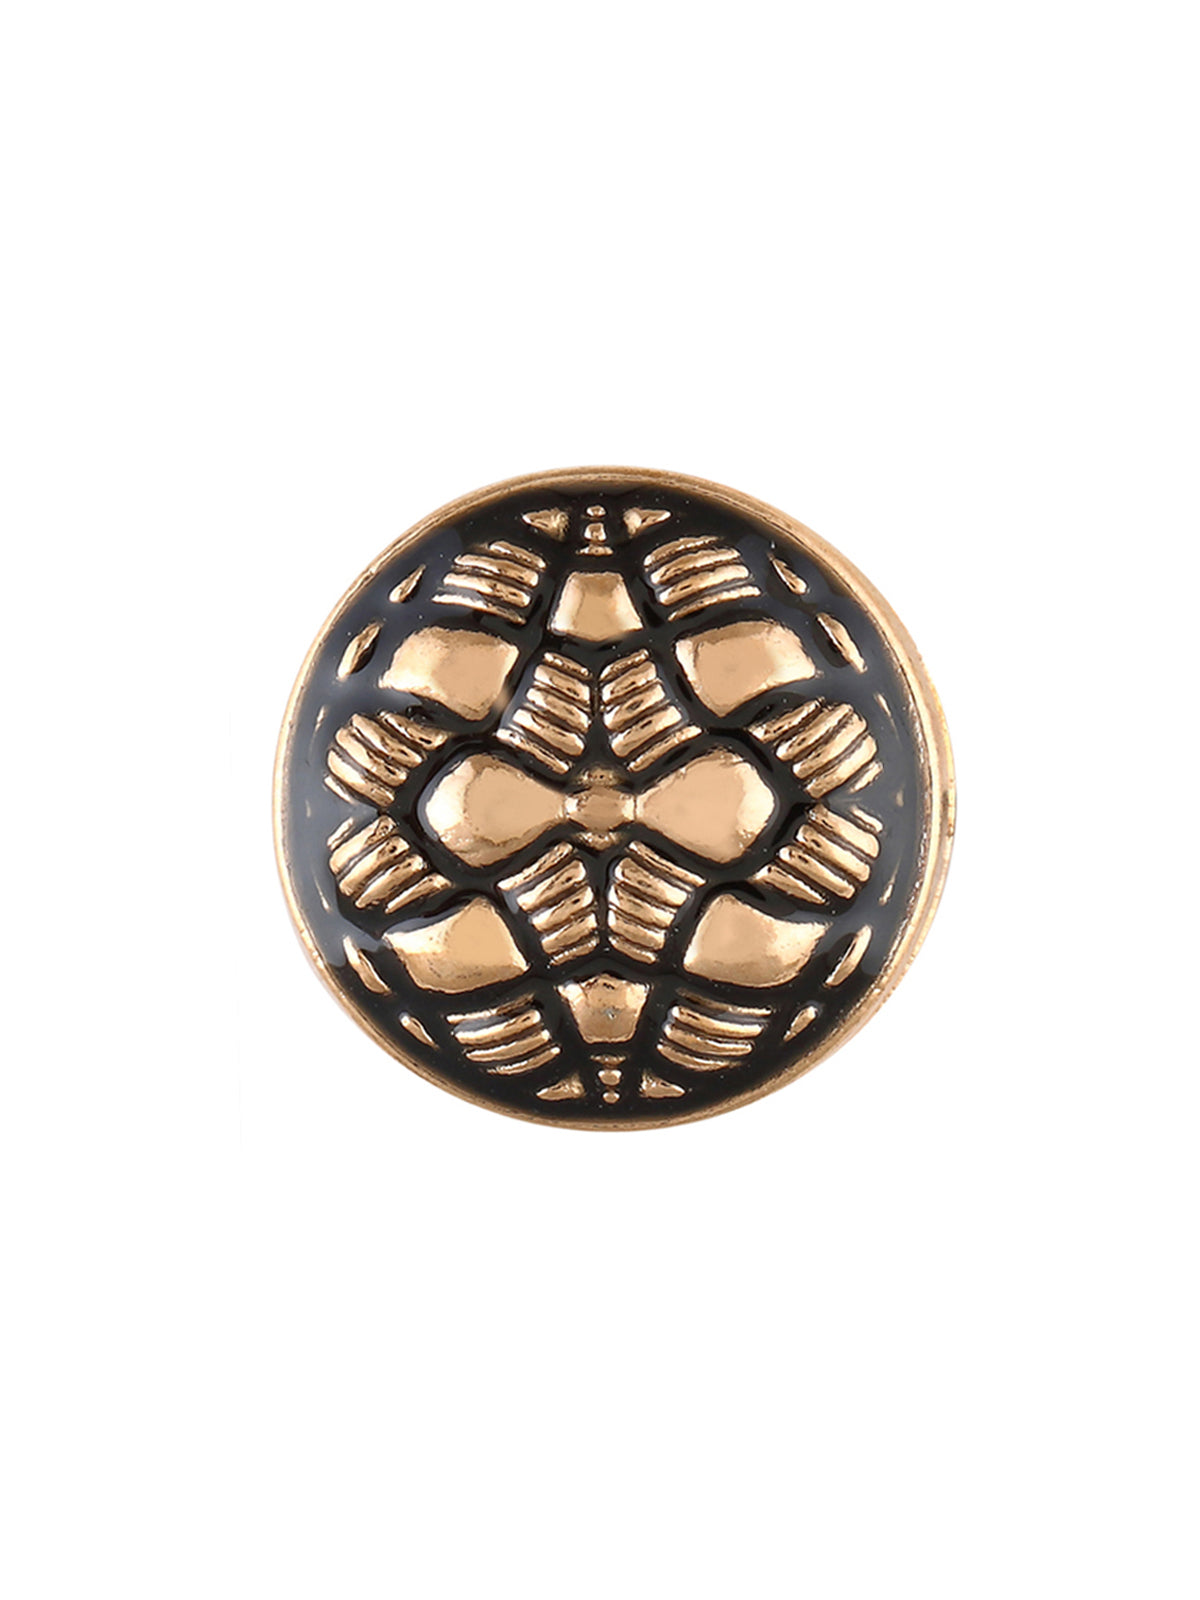 Fancy Designer Antique Looking Ethnic Button in Antique Gold Color